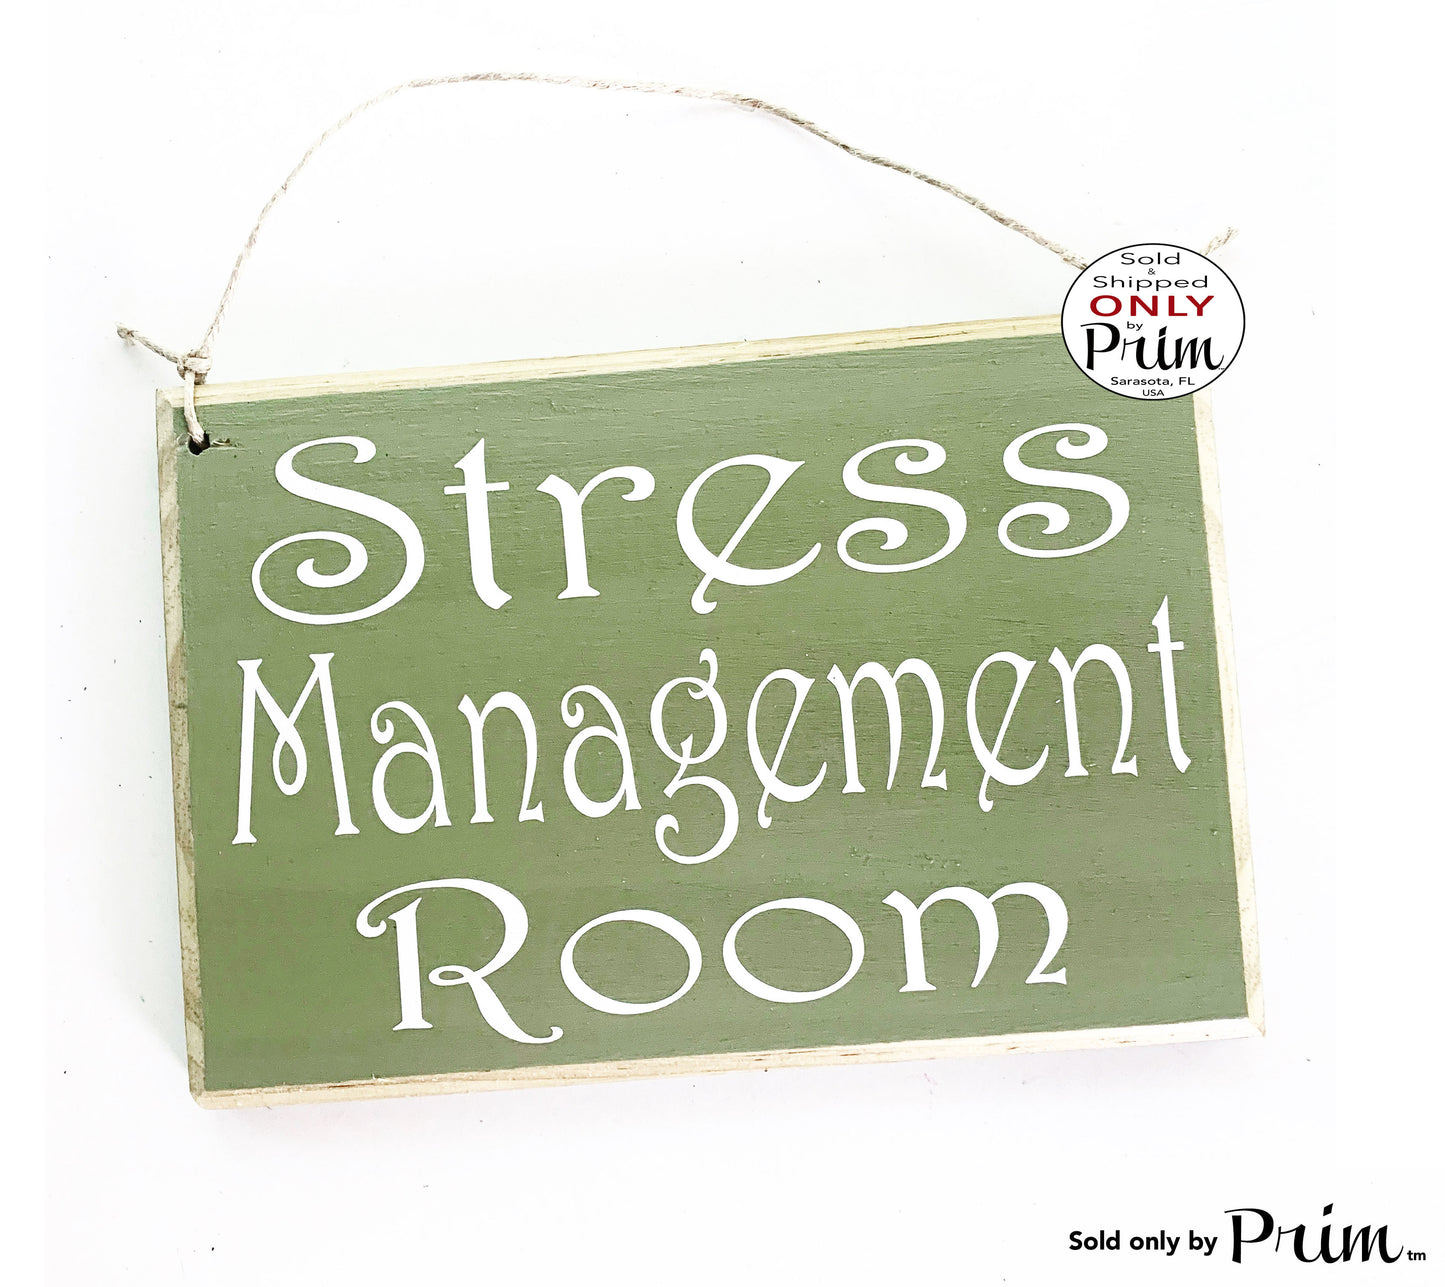 8x6 Stress Management Room Custom Wood Sign In Session Shhh Please Do Not Disturb Relaxation Meditation Zen Quiet Relief Door Plaque Designs by Prim